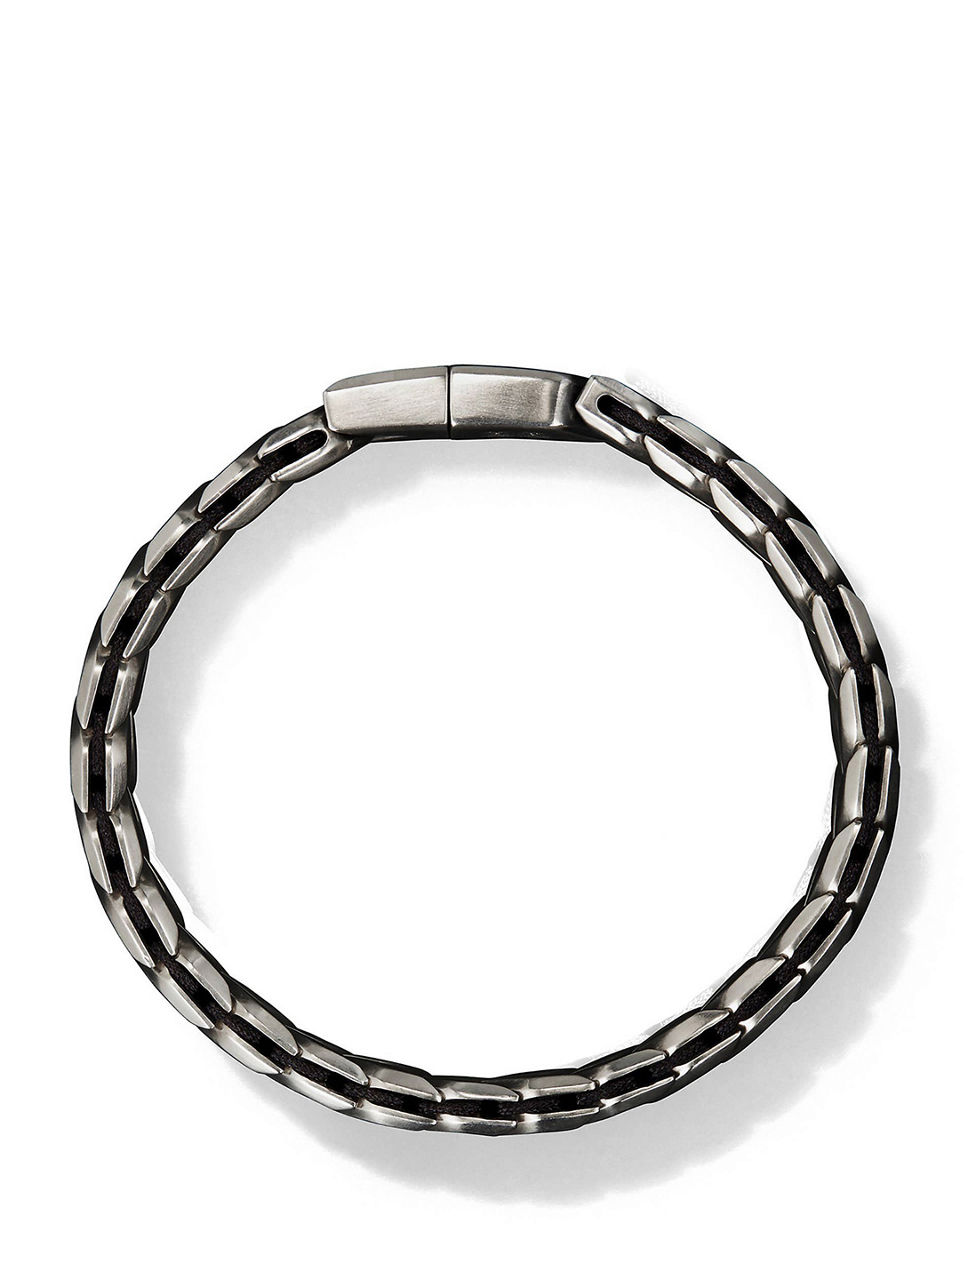 Chevron Woven Bracelet Sterling Silver With Pavé Black Diamonds And Nylon